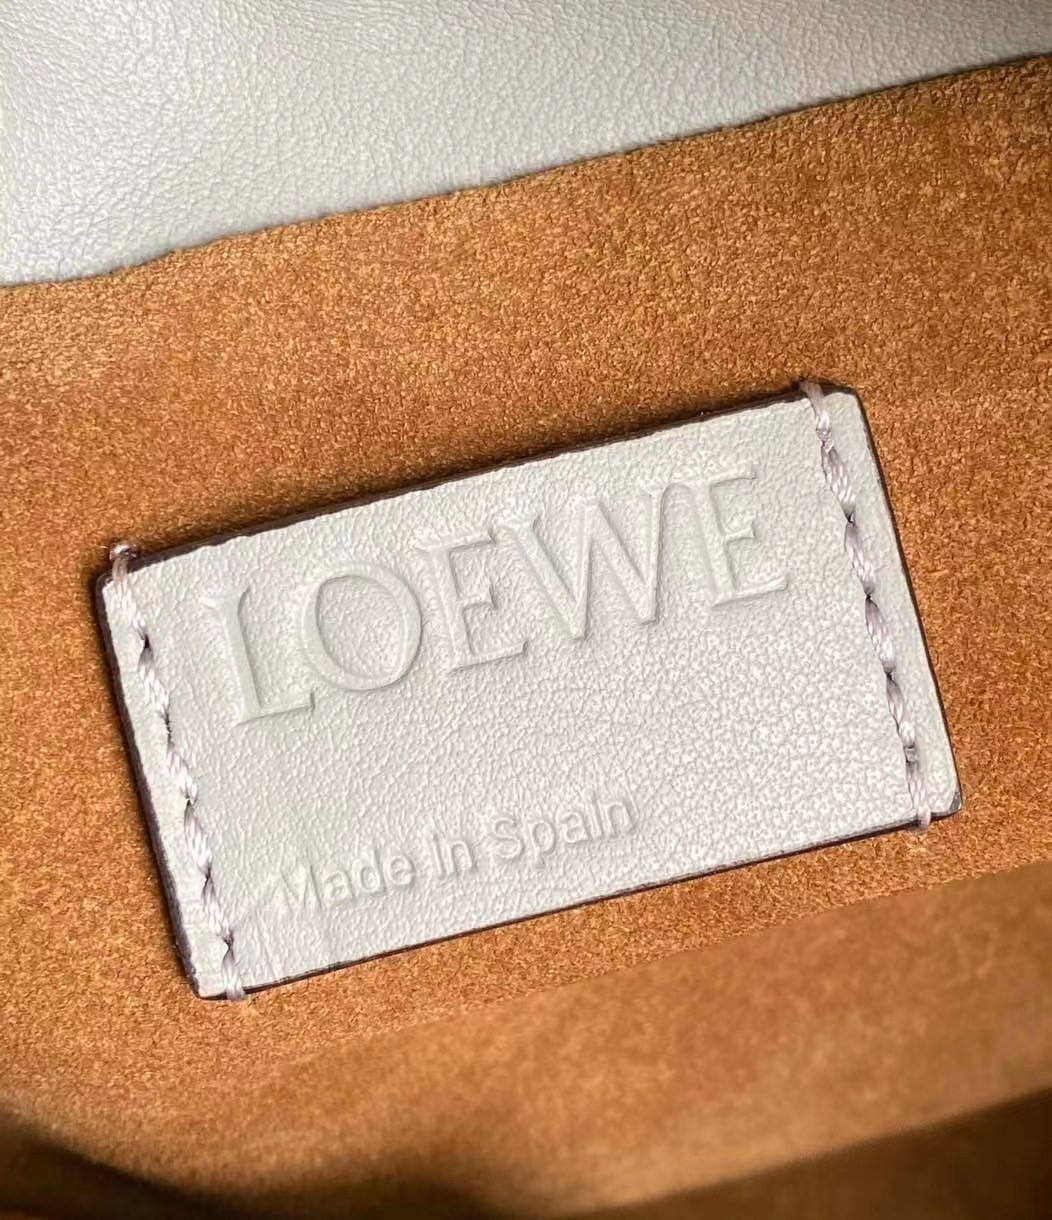 Loewe Flamenco Clutch In Ash Grey Nappa Leather 147